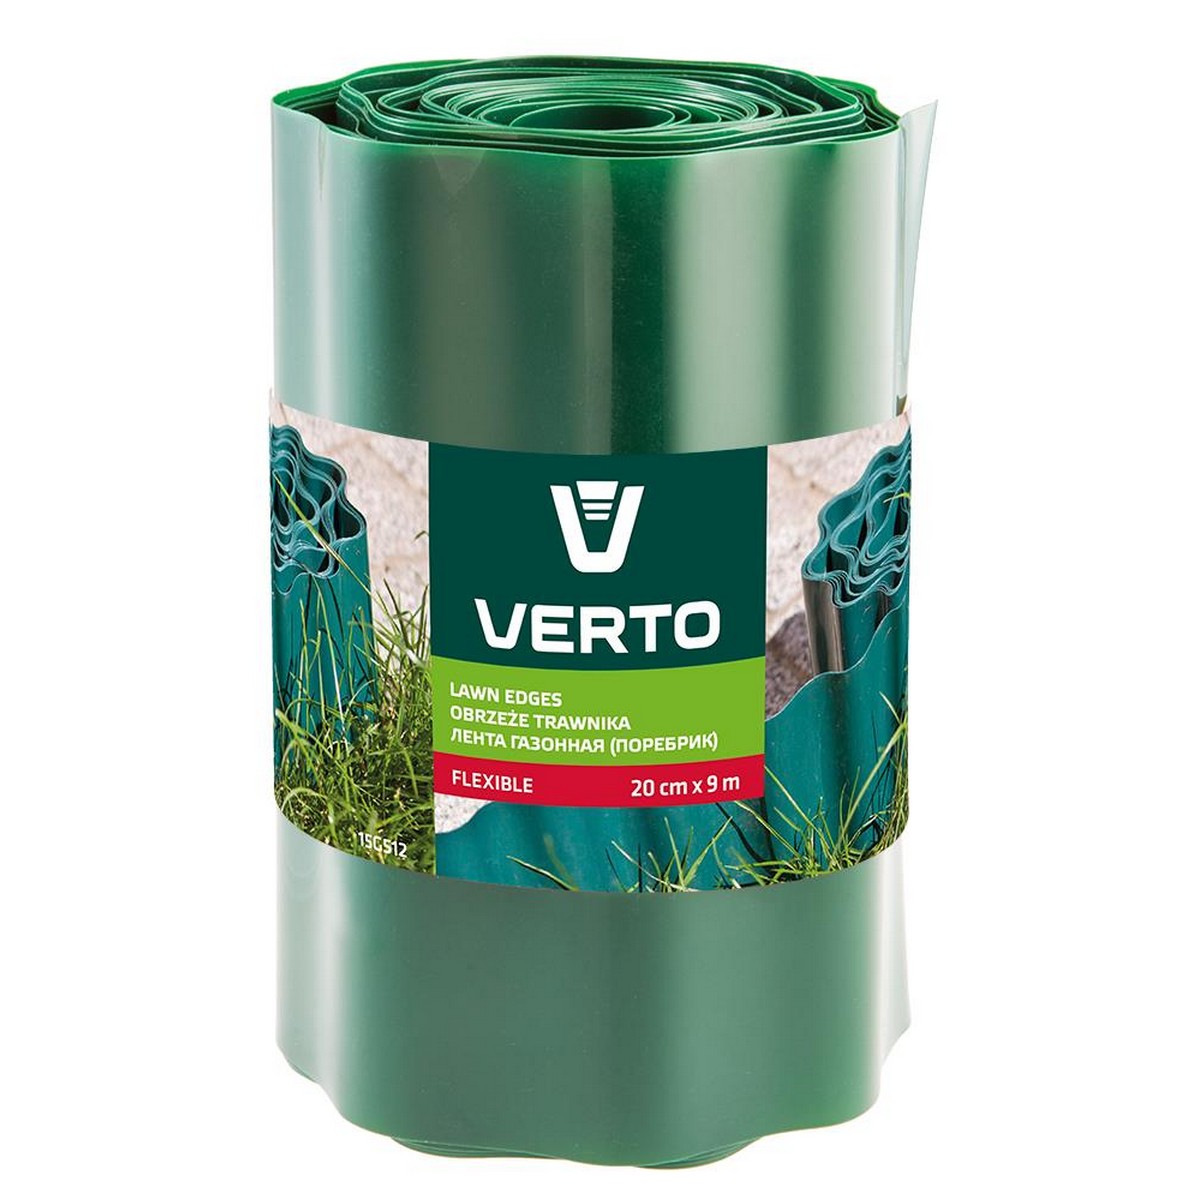 Характеристики лента газонная Verto 15G512